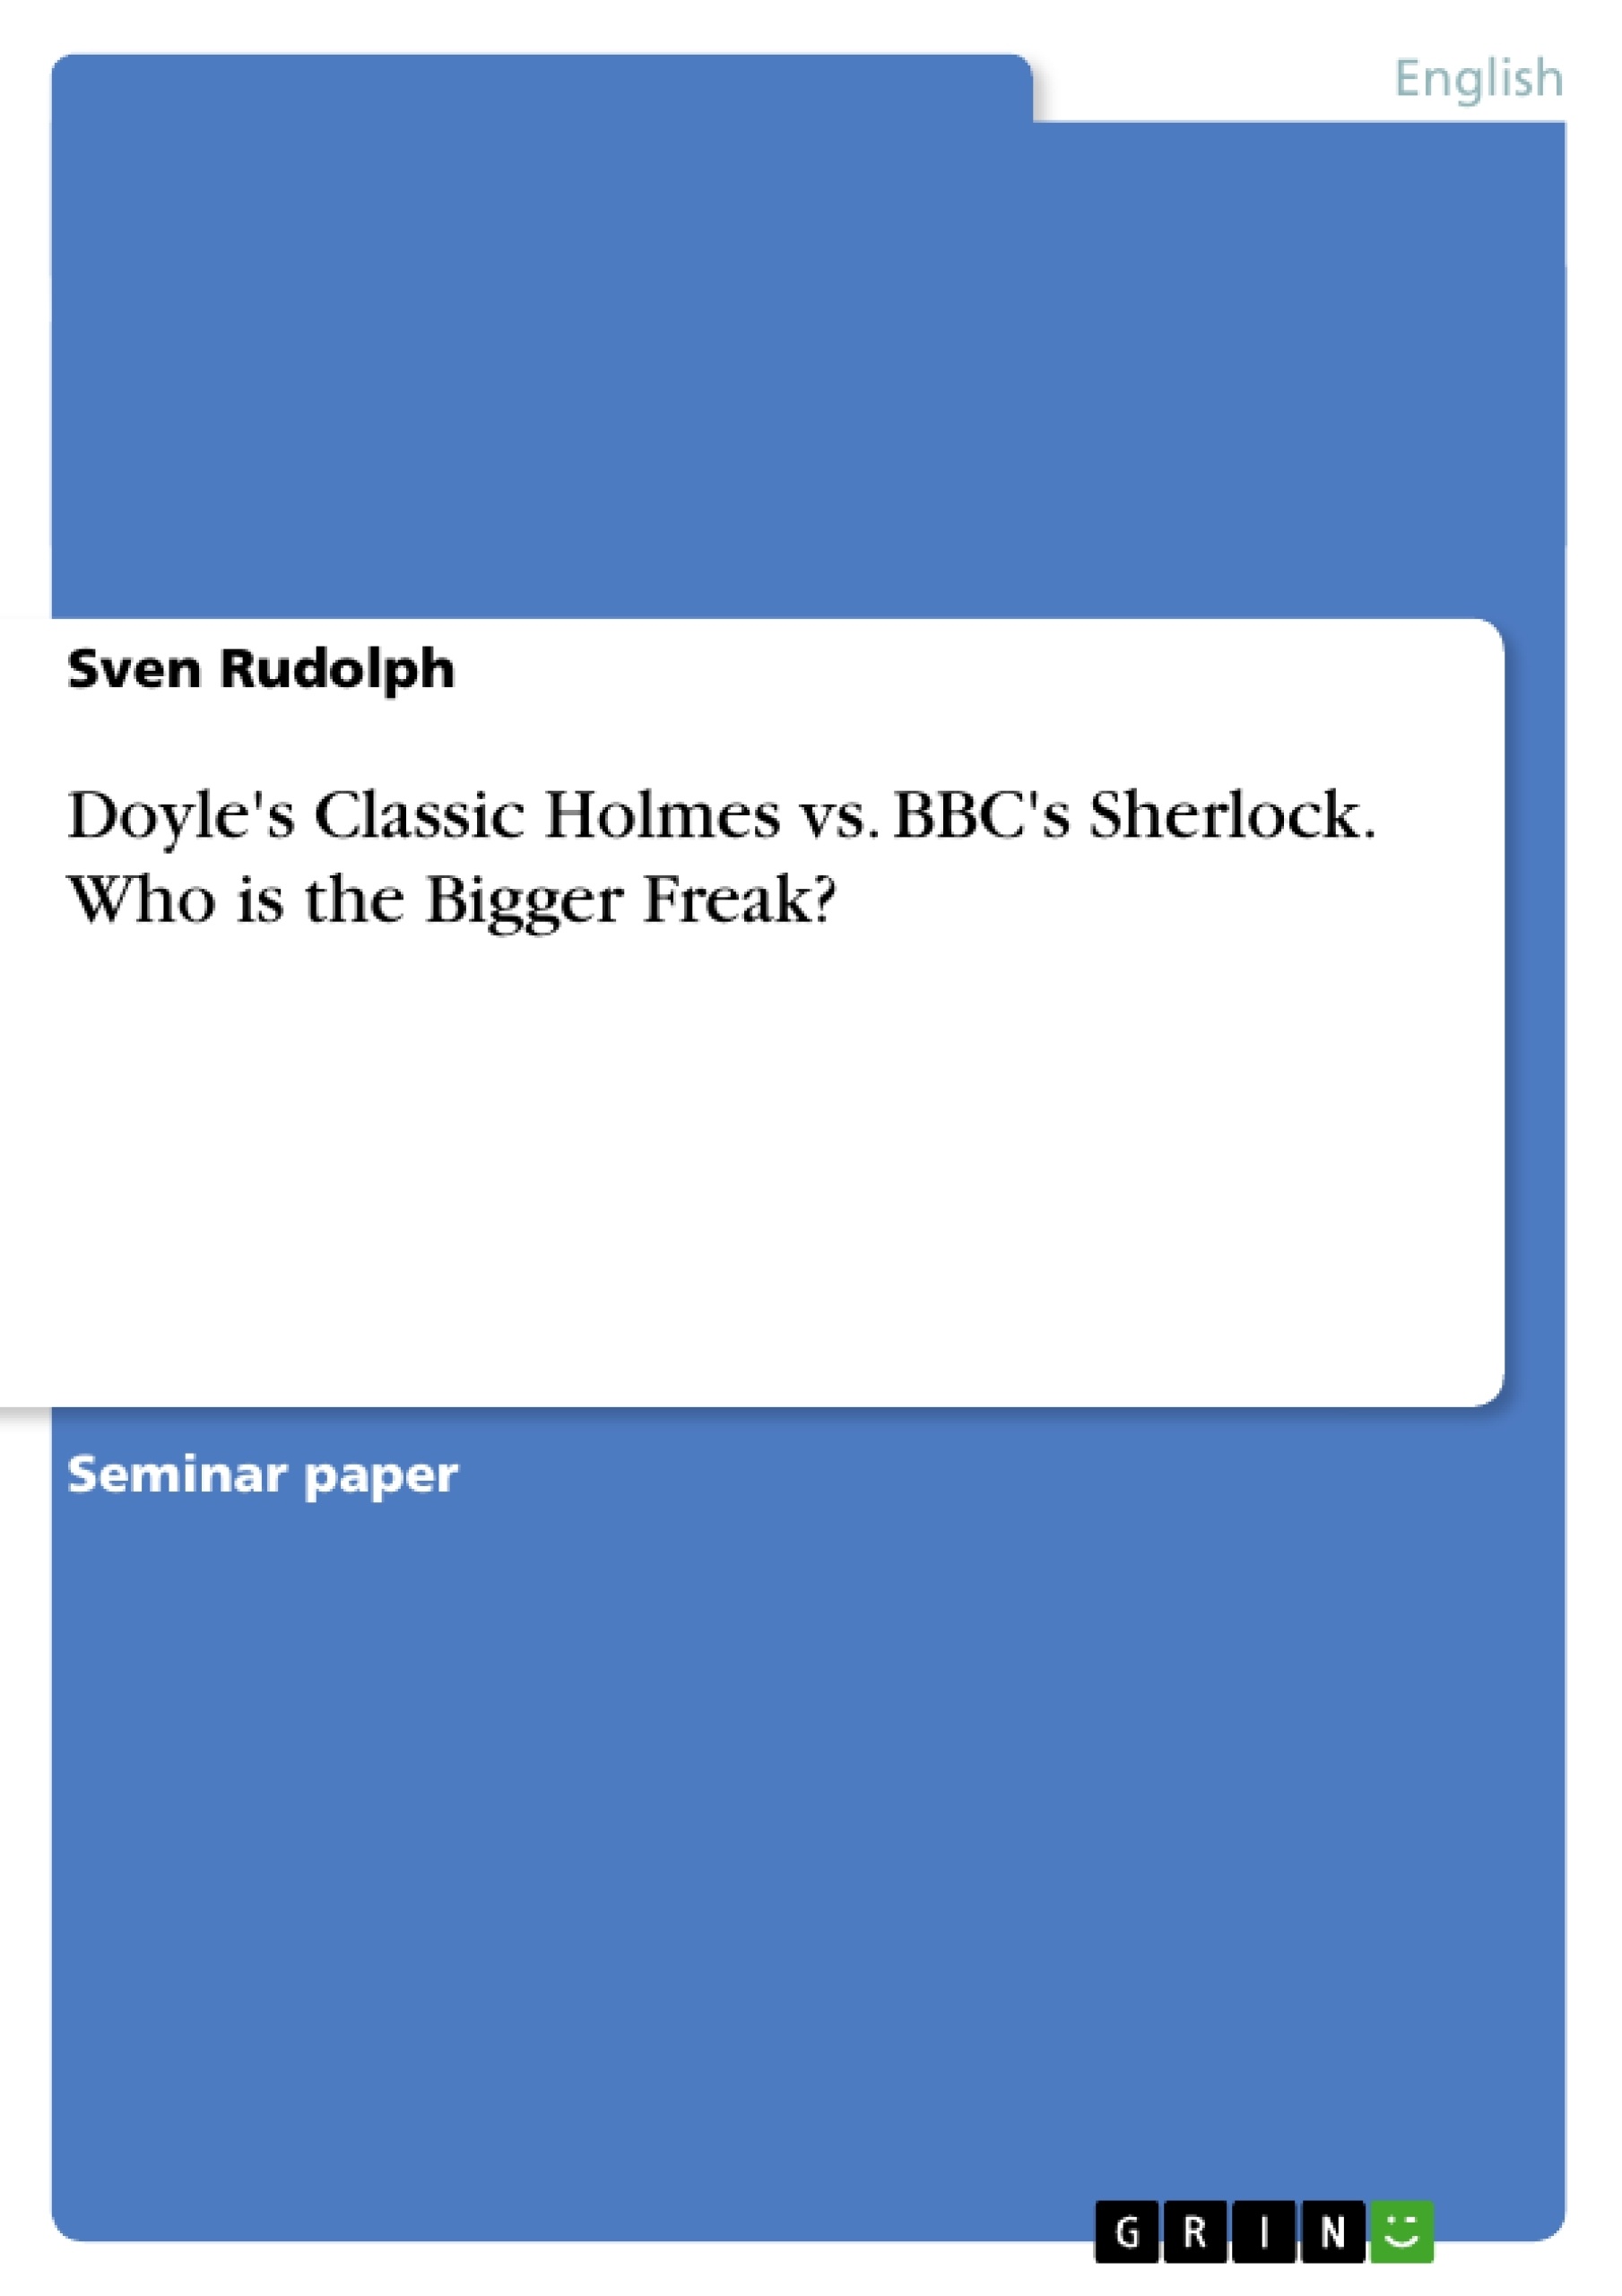 Titre: Doyle's Classic Holmes vs. BBC's Sherlock. Who is the Bigger Freak?